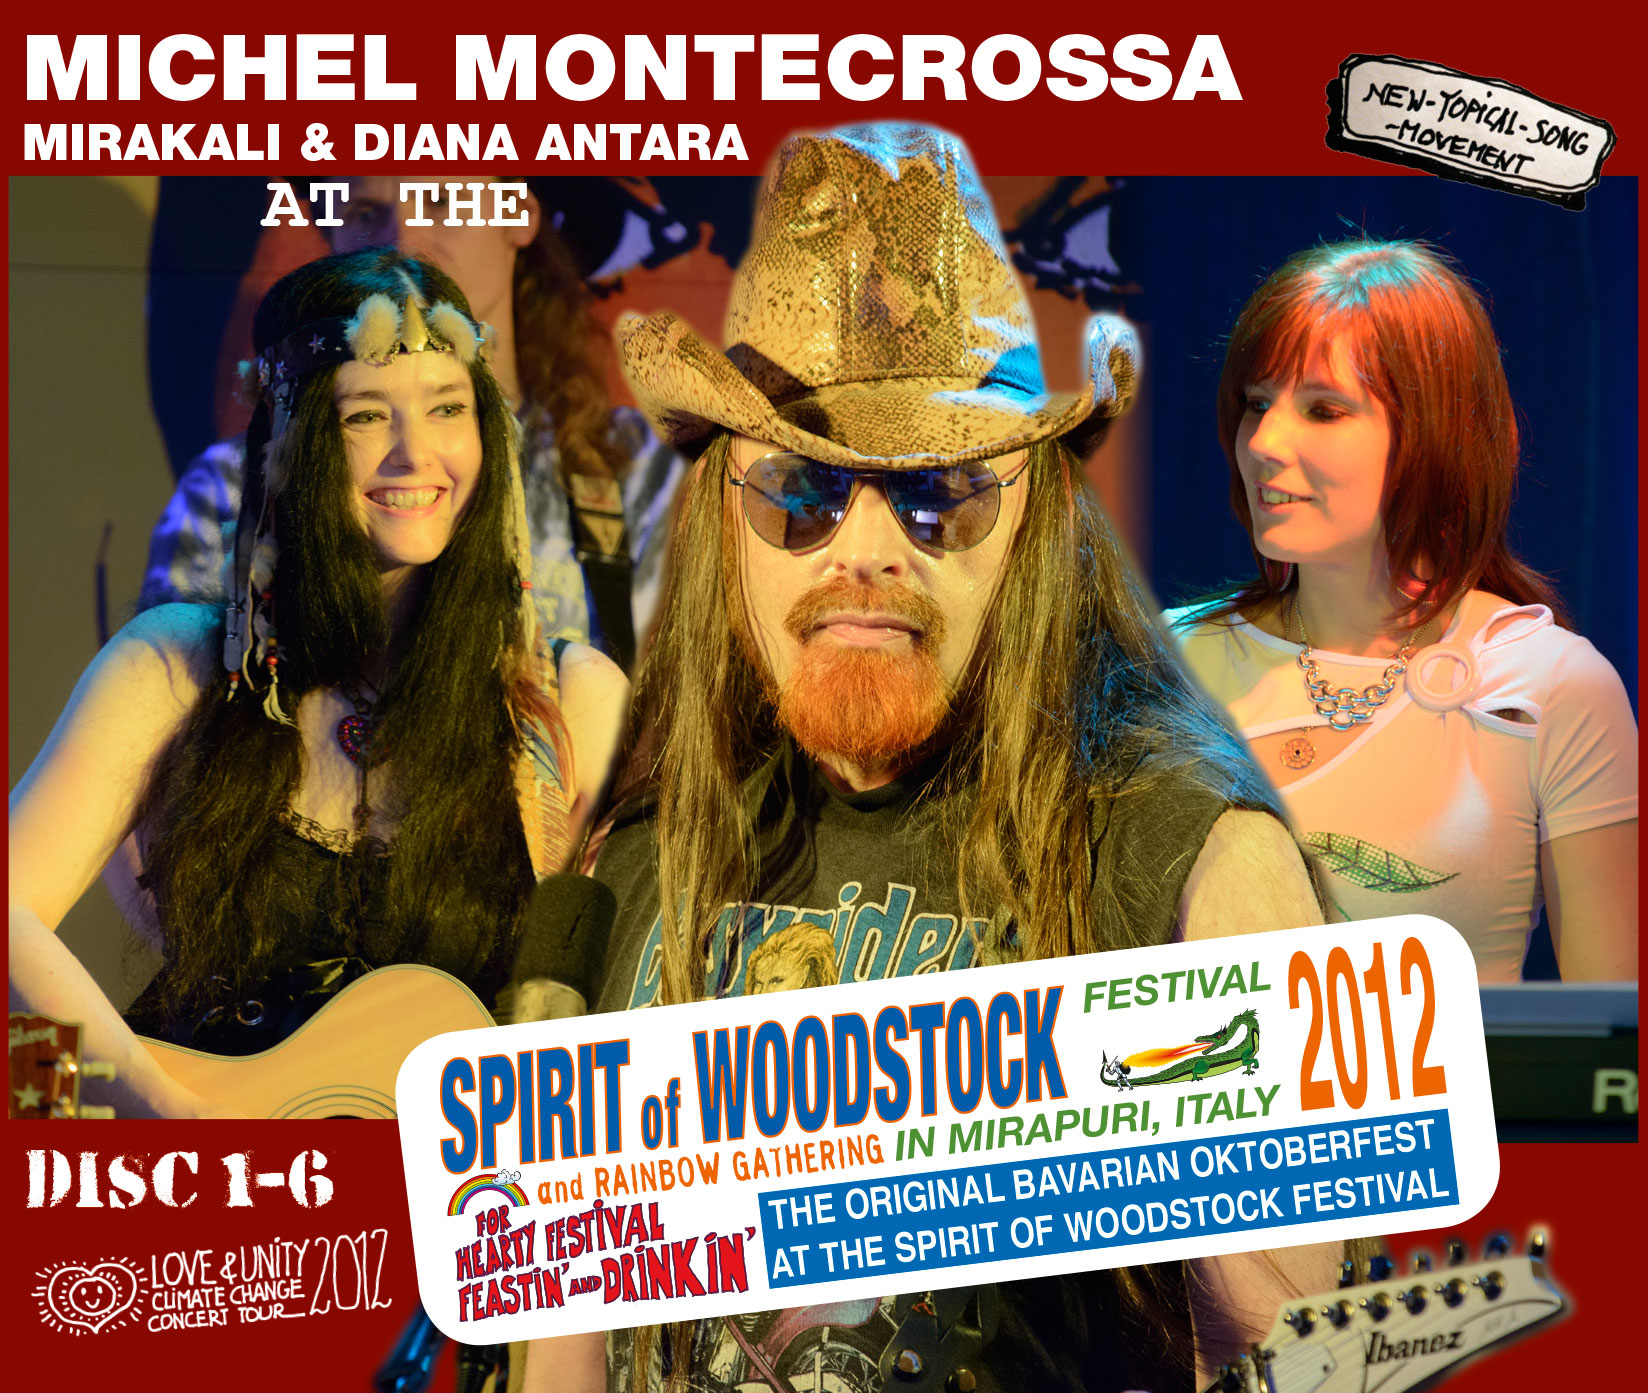 Spirit of Woodstock Festival 2012 in Mirapuri, Italy - Disc 1-6